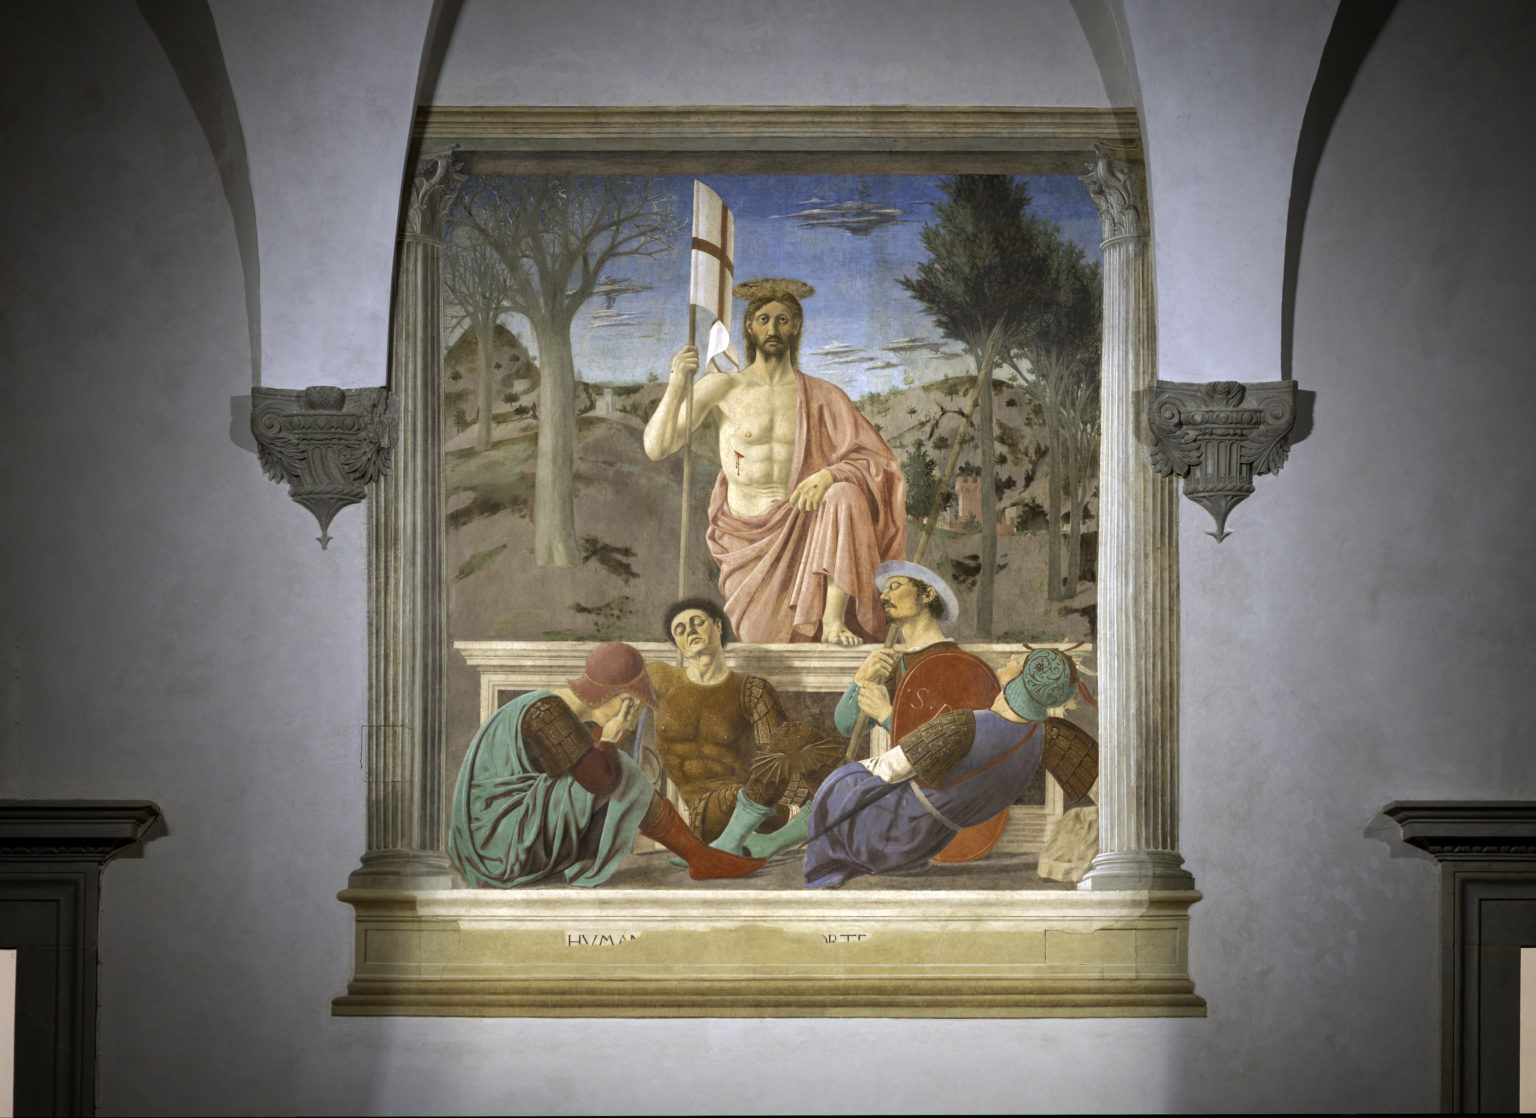 3. "The Resurrection" by Piero della Francesca - wide 6